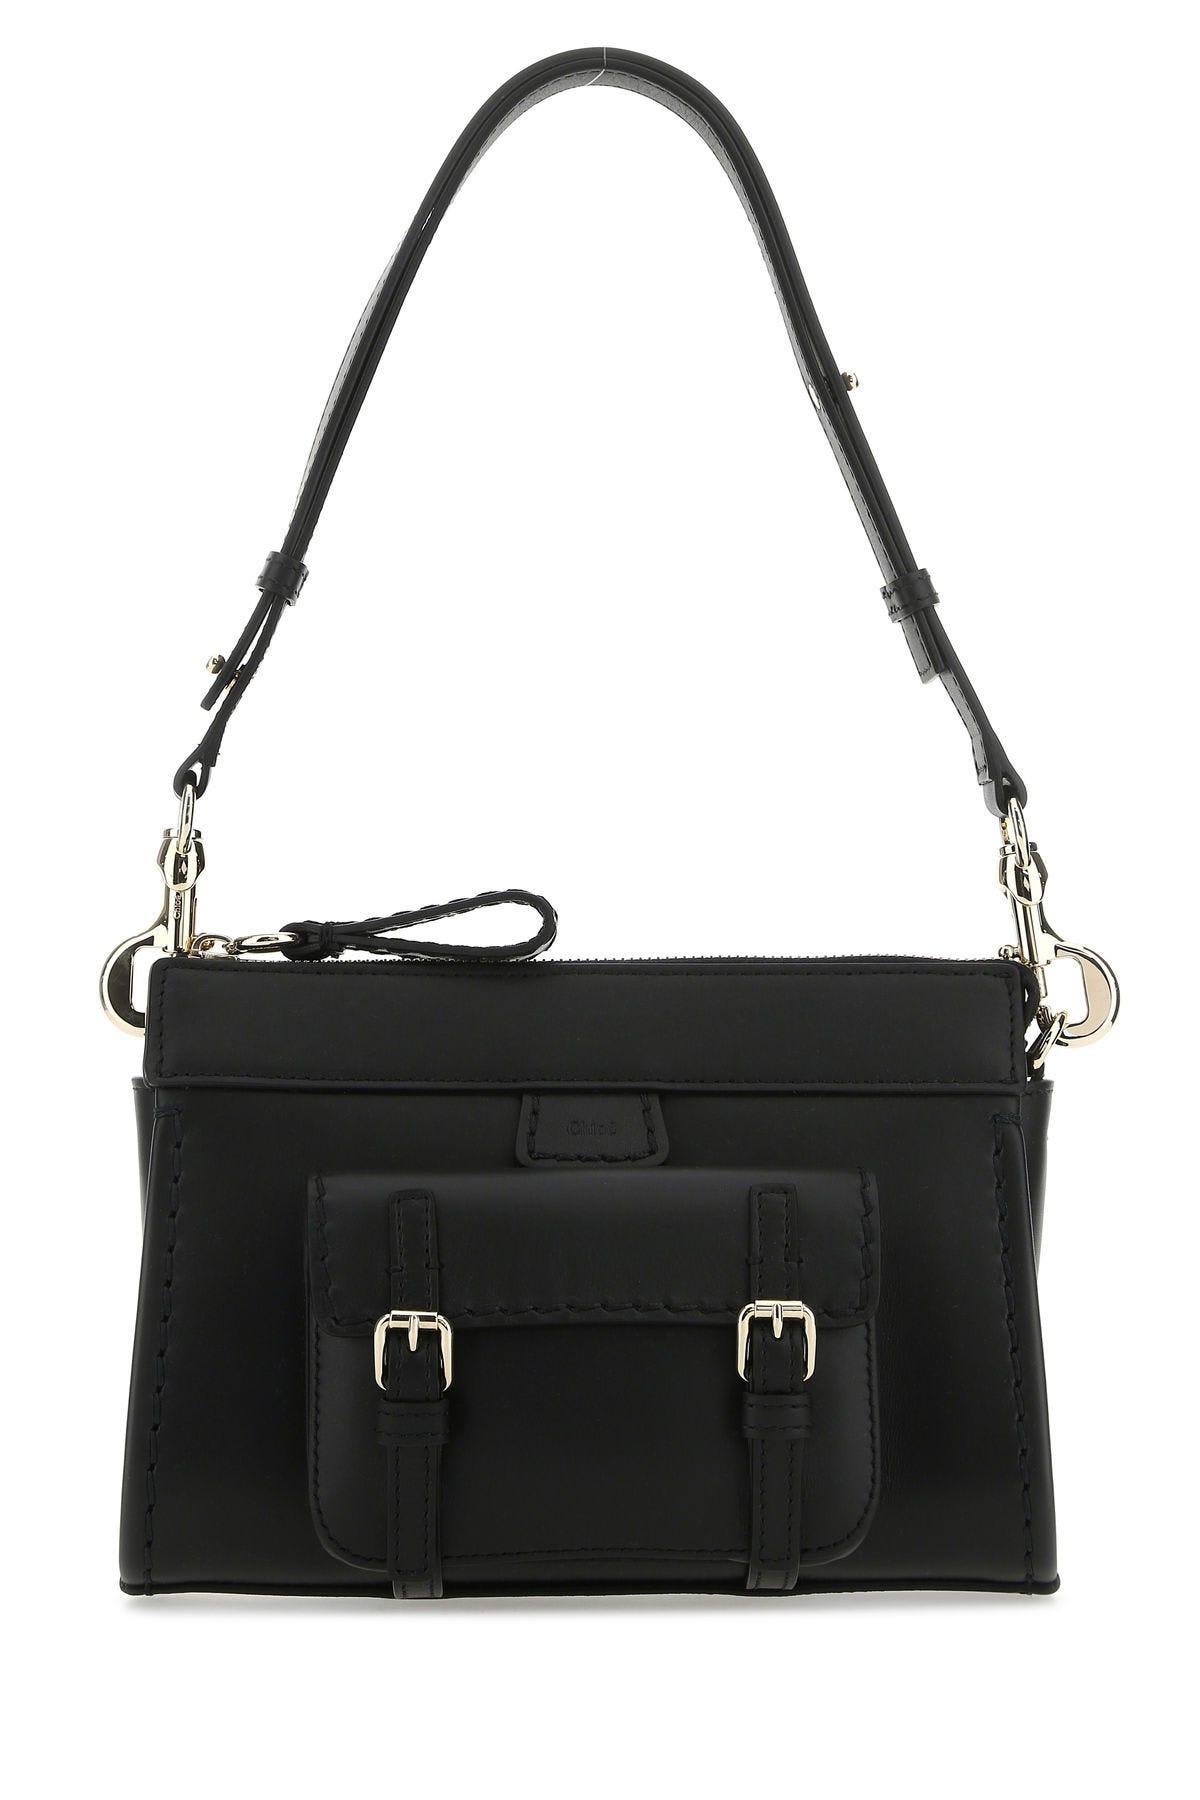 Chloé Black Leather Mini Edith Shoulder Bag